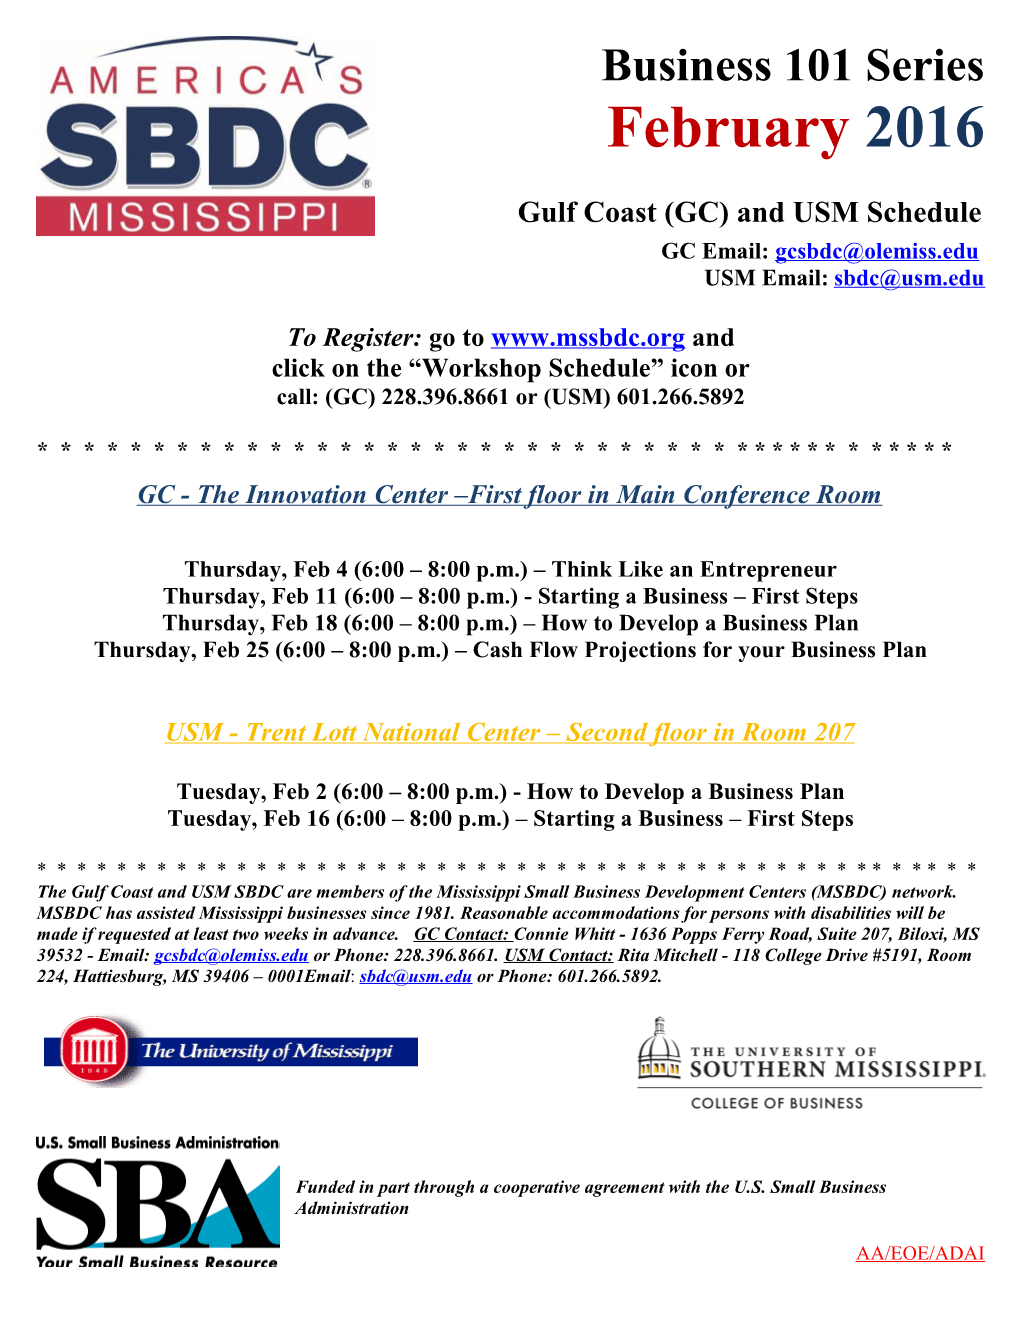 Gulf Coast(GC) and USM Schedule